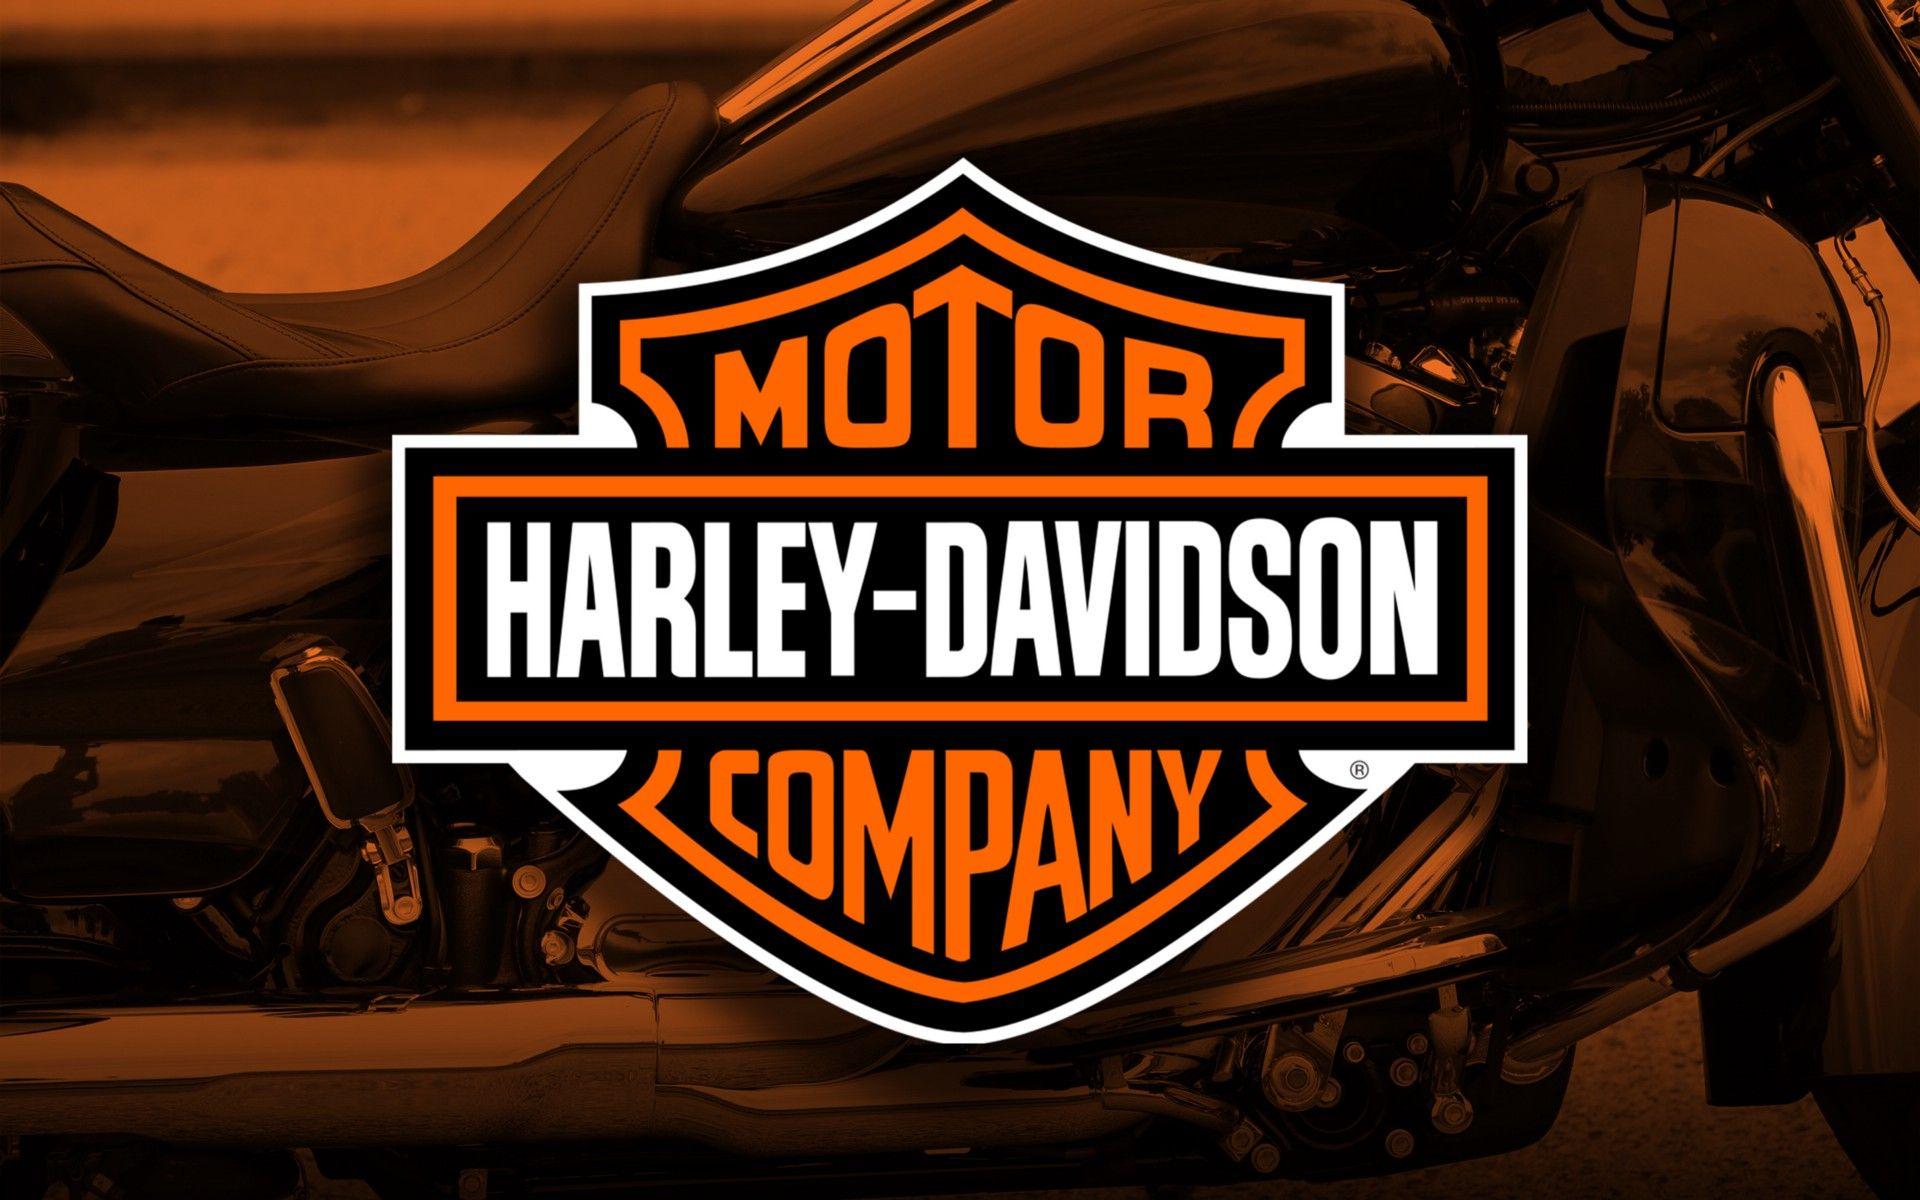 Harley Davidson Football Logo - Keep your motor running: The Harley Davidson brand story